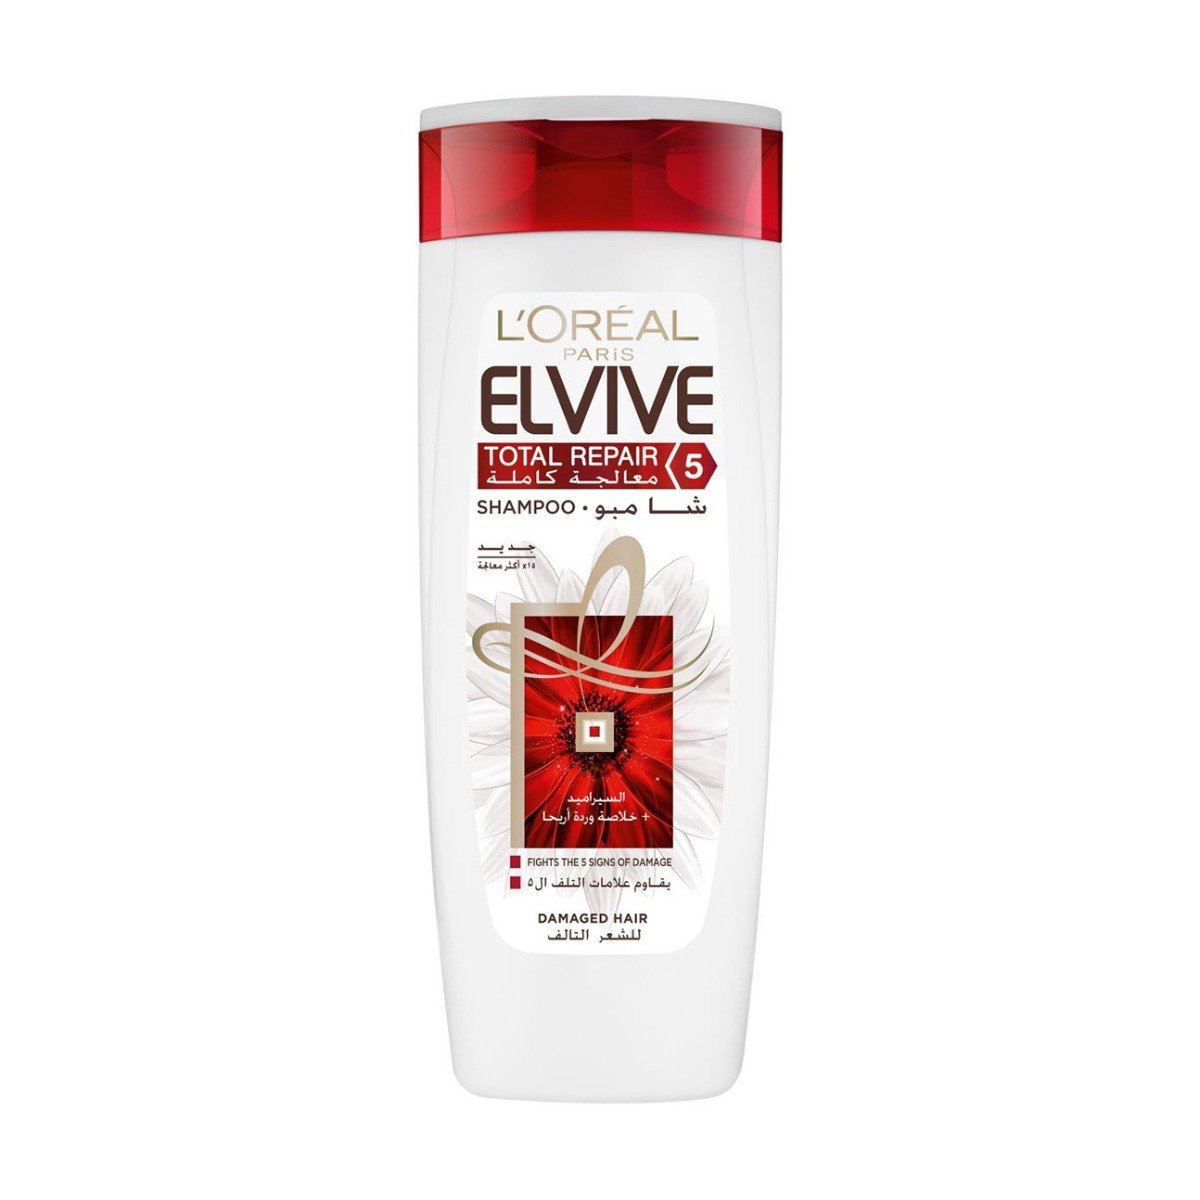 L'Oreal Elvive Shampoo Total Repair 5 - Bloom Pharmacy